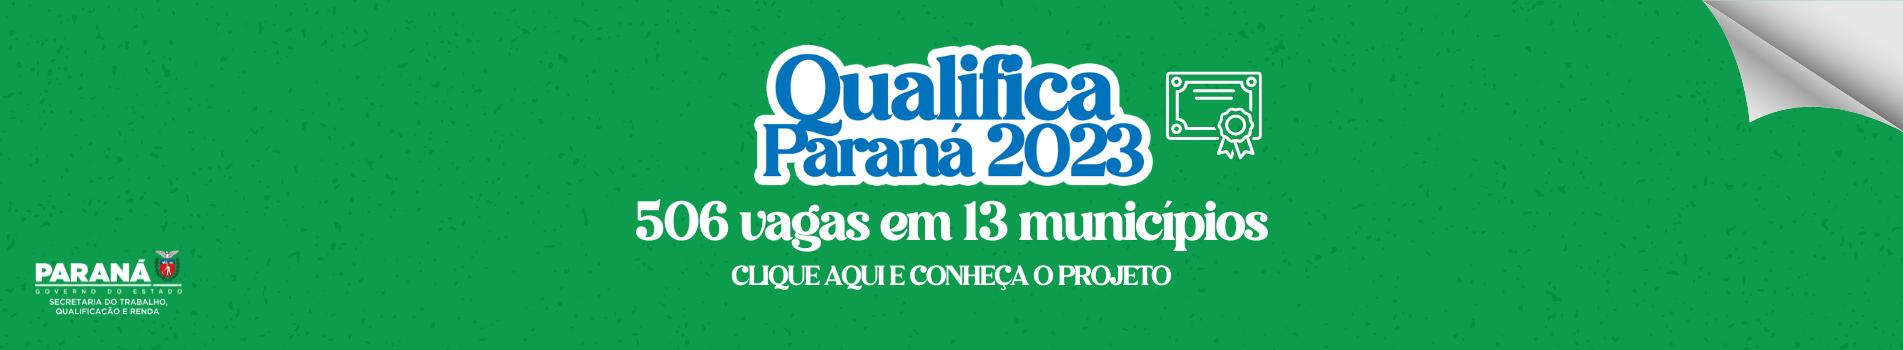 Banner Qualifica Paraná 2023